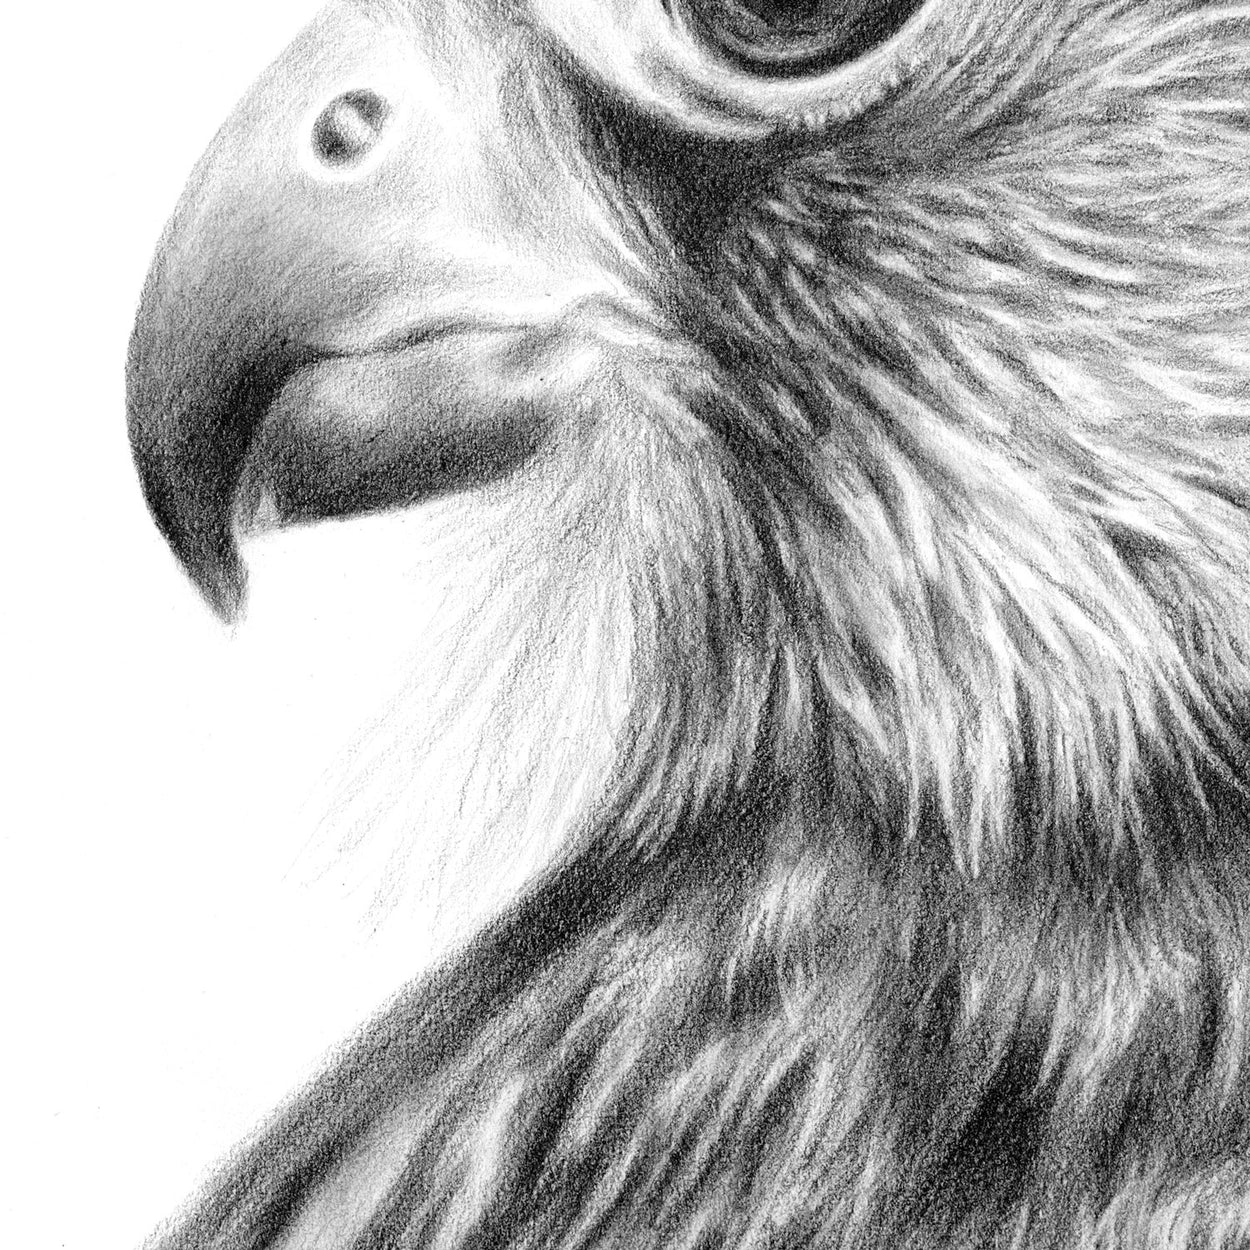 Kestrel Drawing Close-up 2 - The Thriving Wild - Jill Dimond